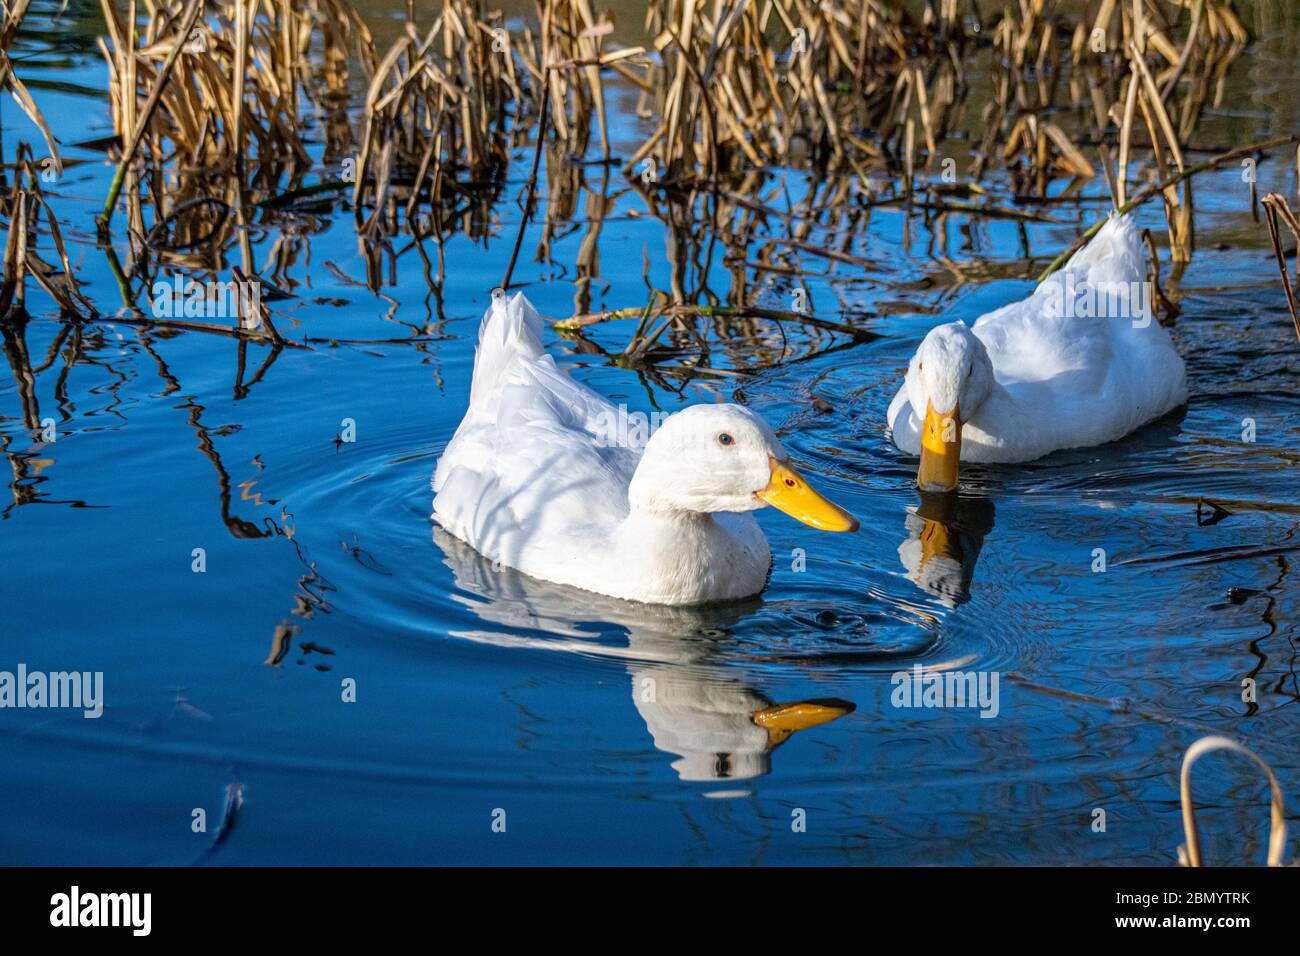 White pekin ducks swimming on a still calm lake with water reflection Stock Photo